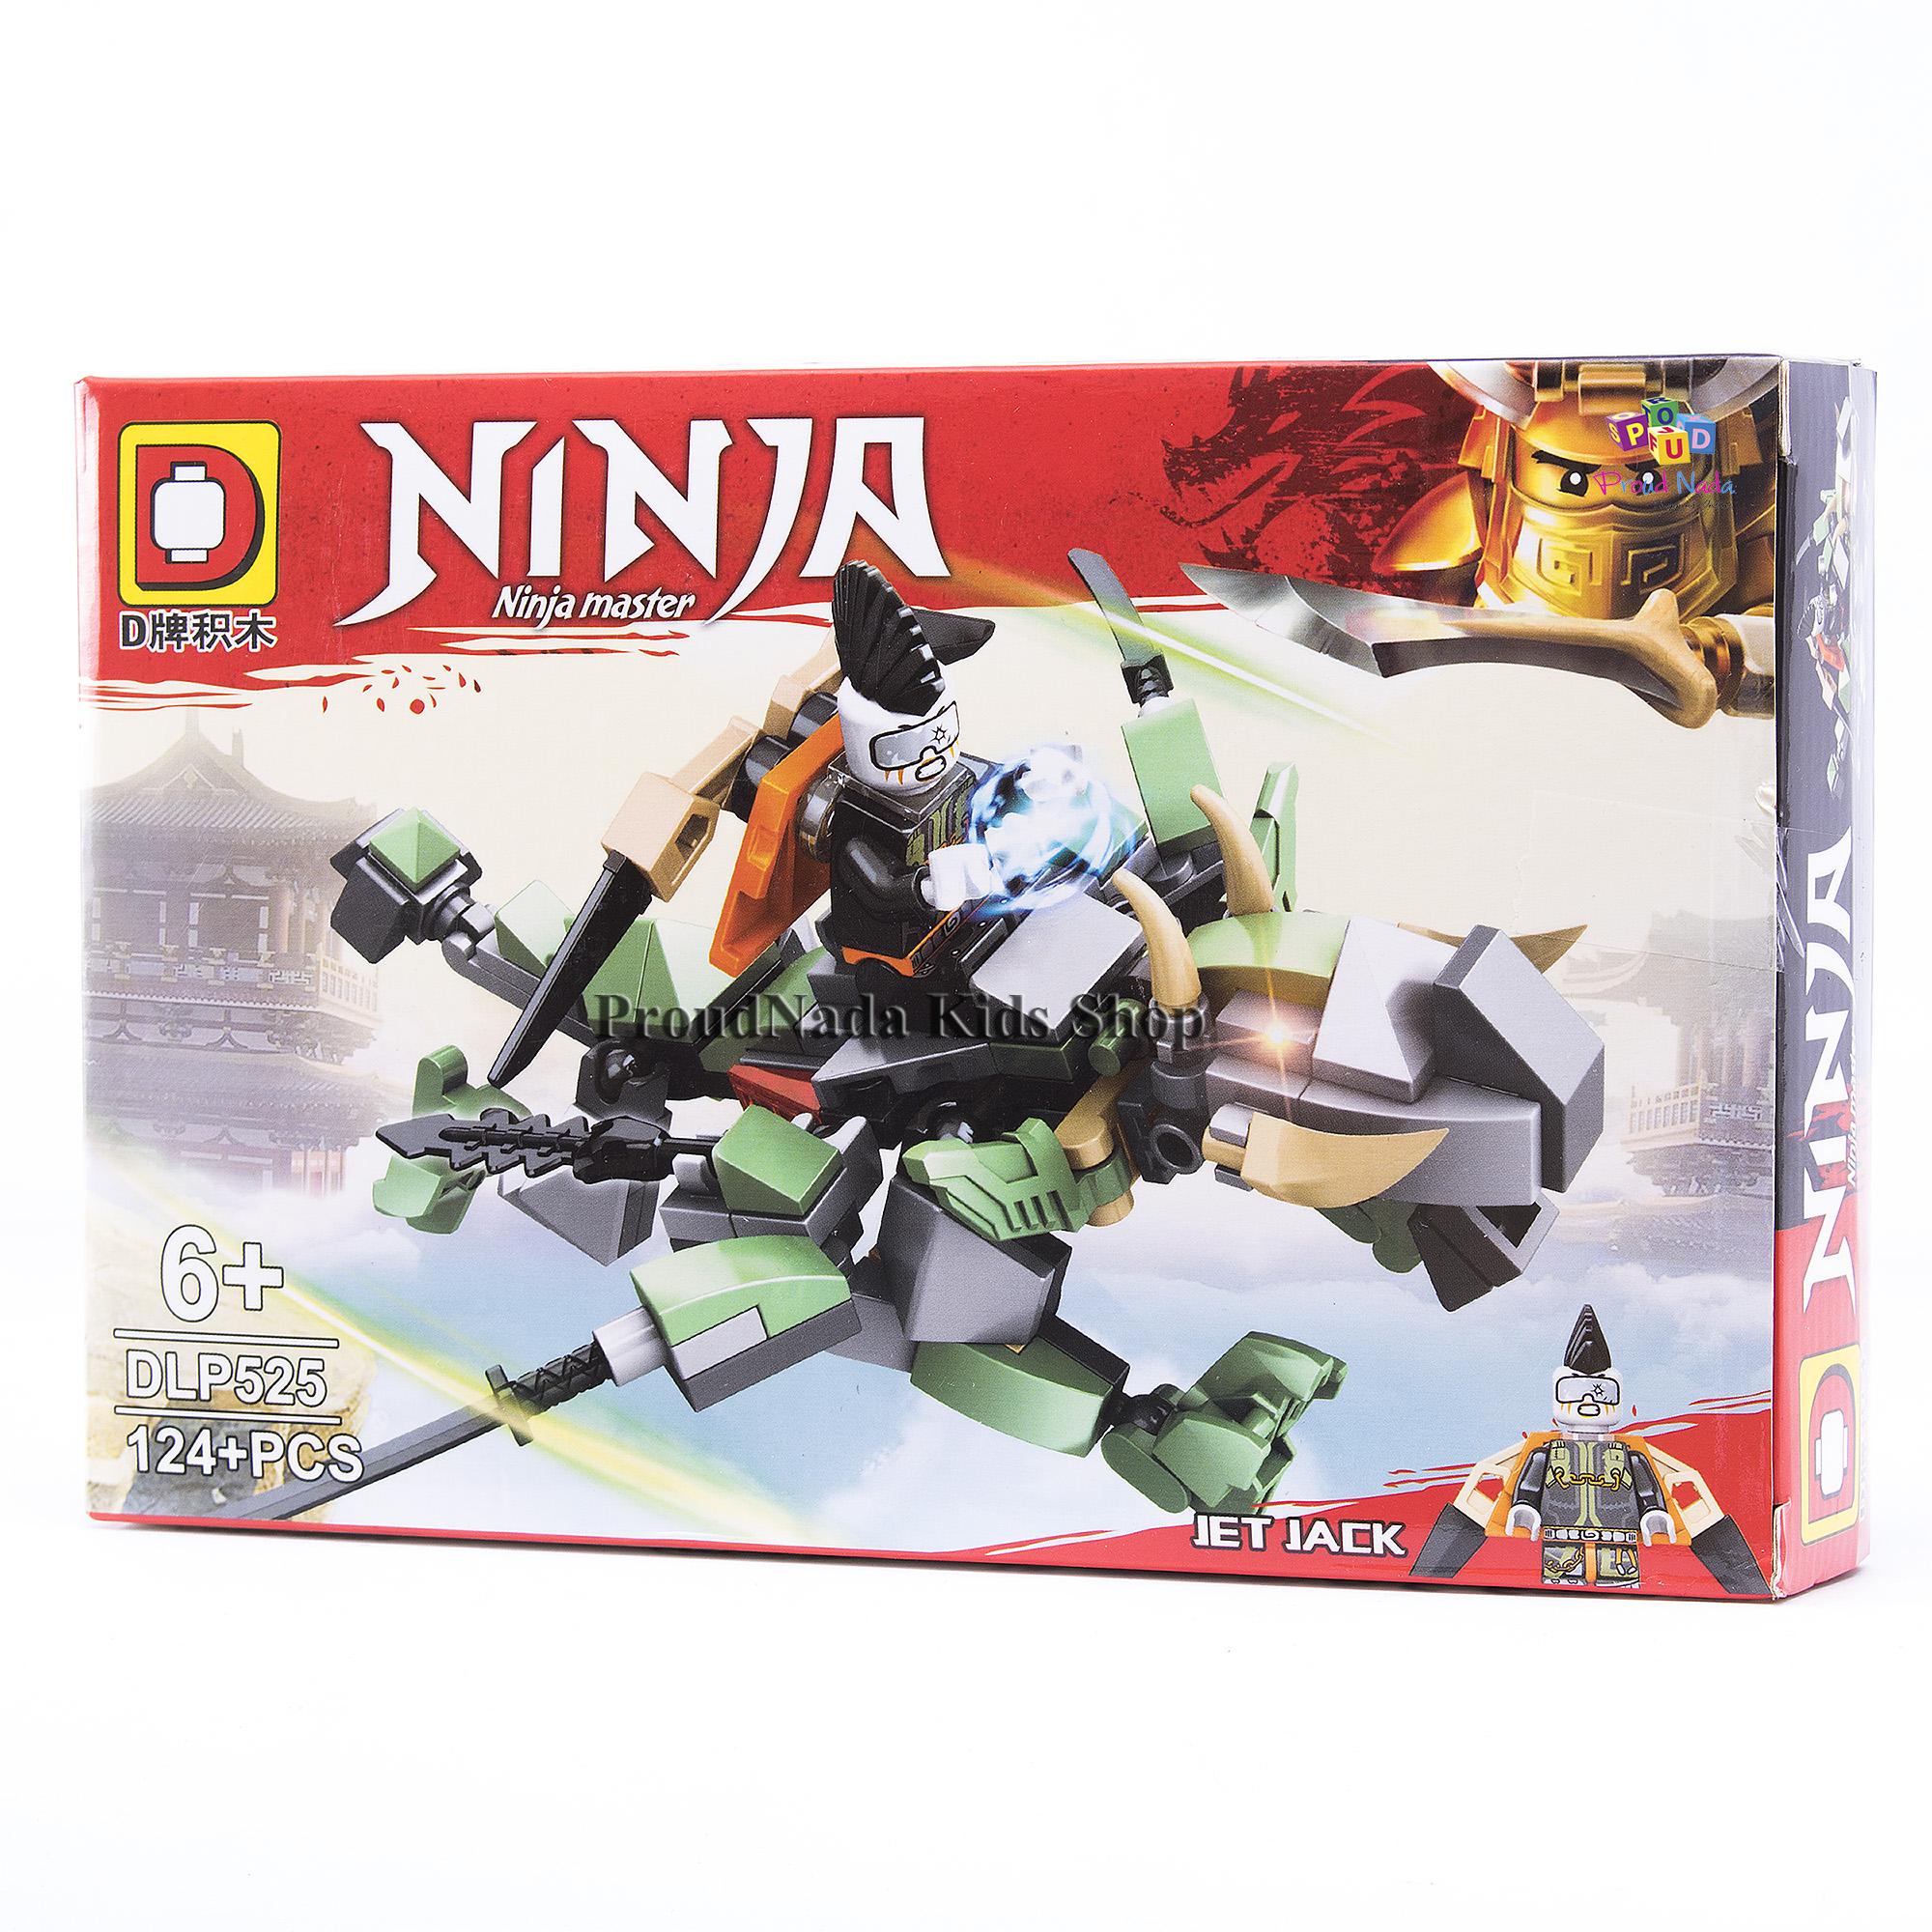 ProudNada Toys ของเล่นเด็กชุดตัวต่อเลโก้นินจามังกร DLP NINJA master DLP525 สี สีเขียวอ่อน